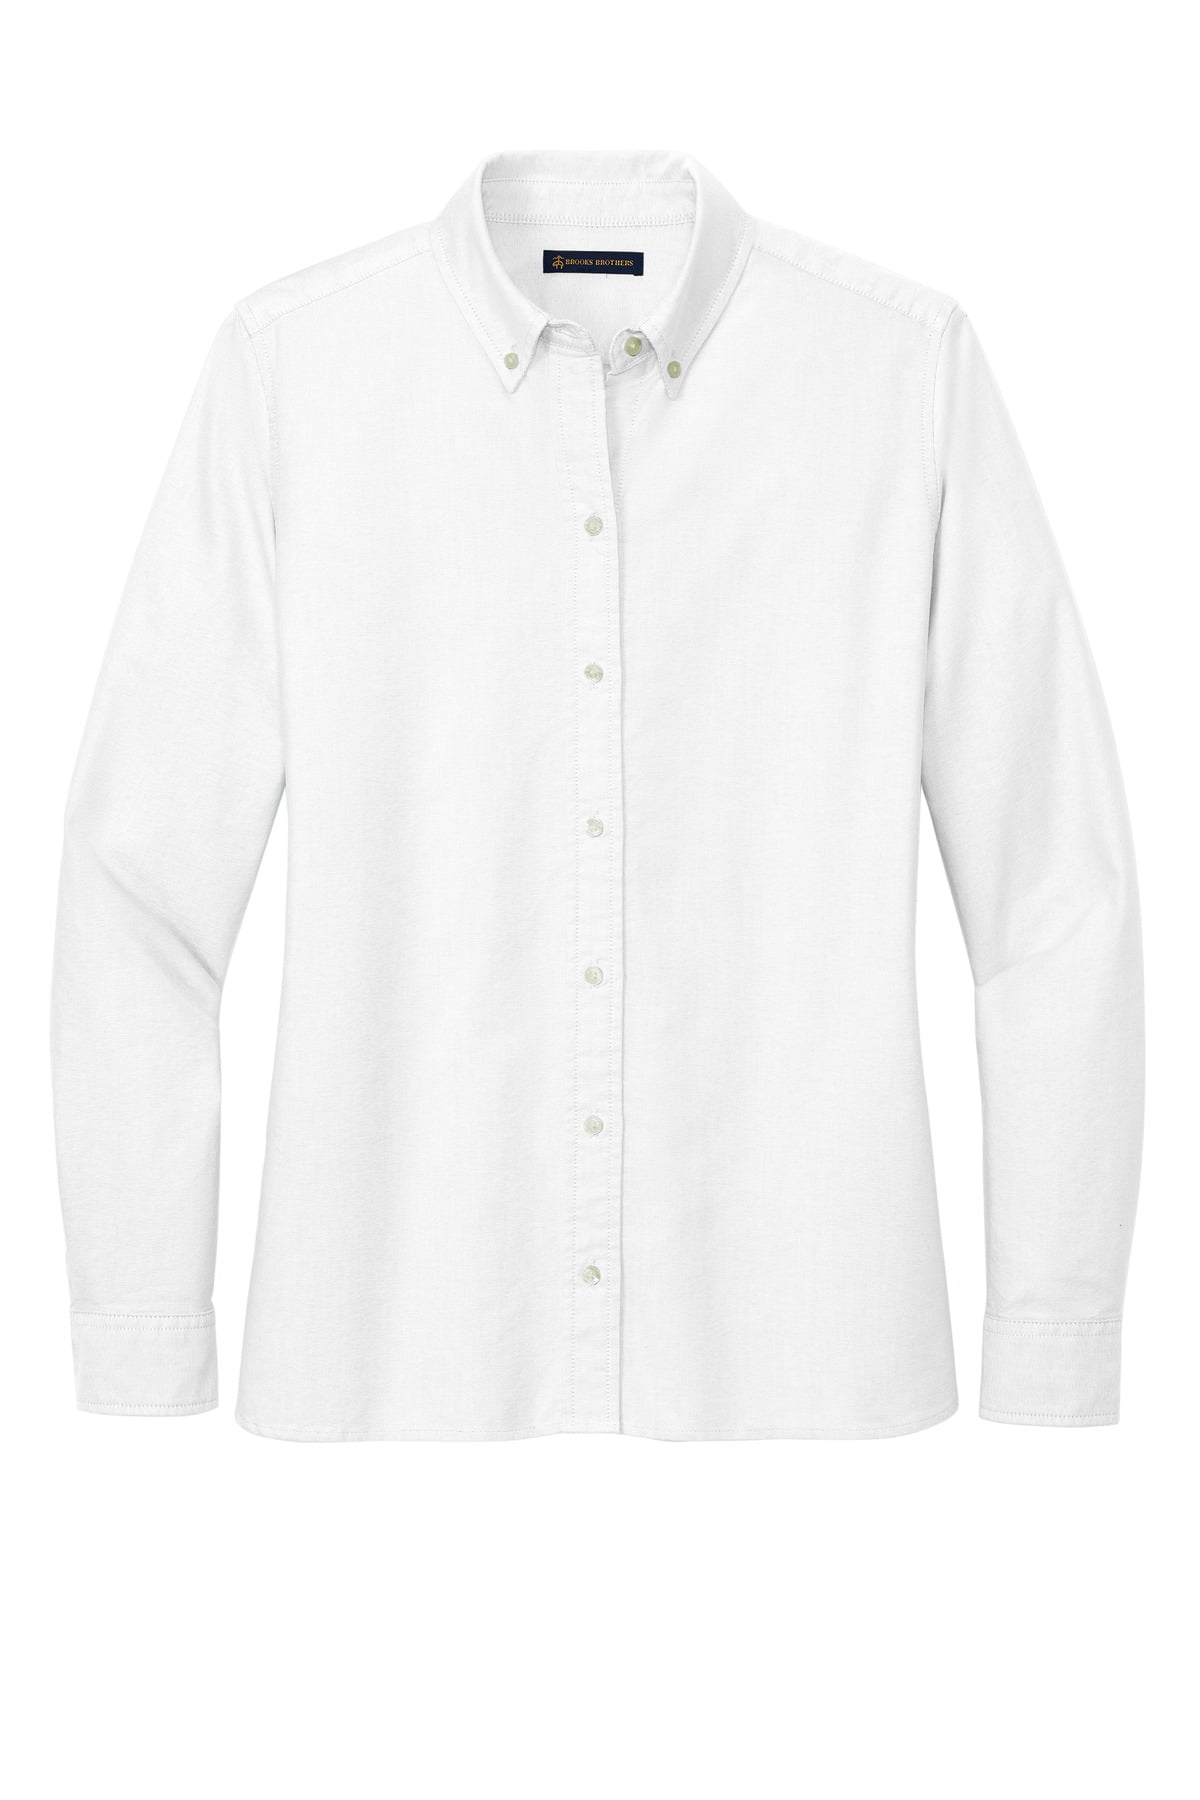 Brooks Brothers Women's Casual Oxford Cloth Shirt BB18005 - Walmart.com